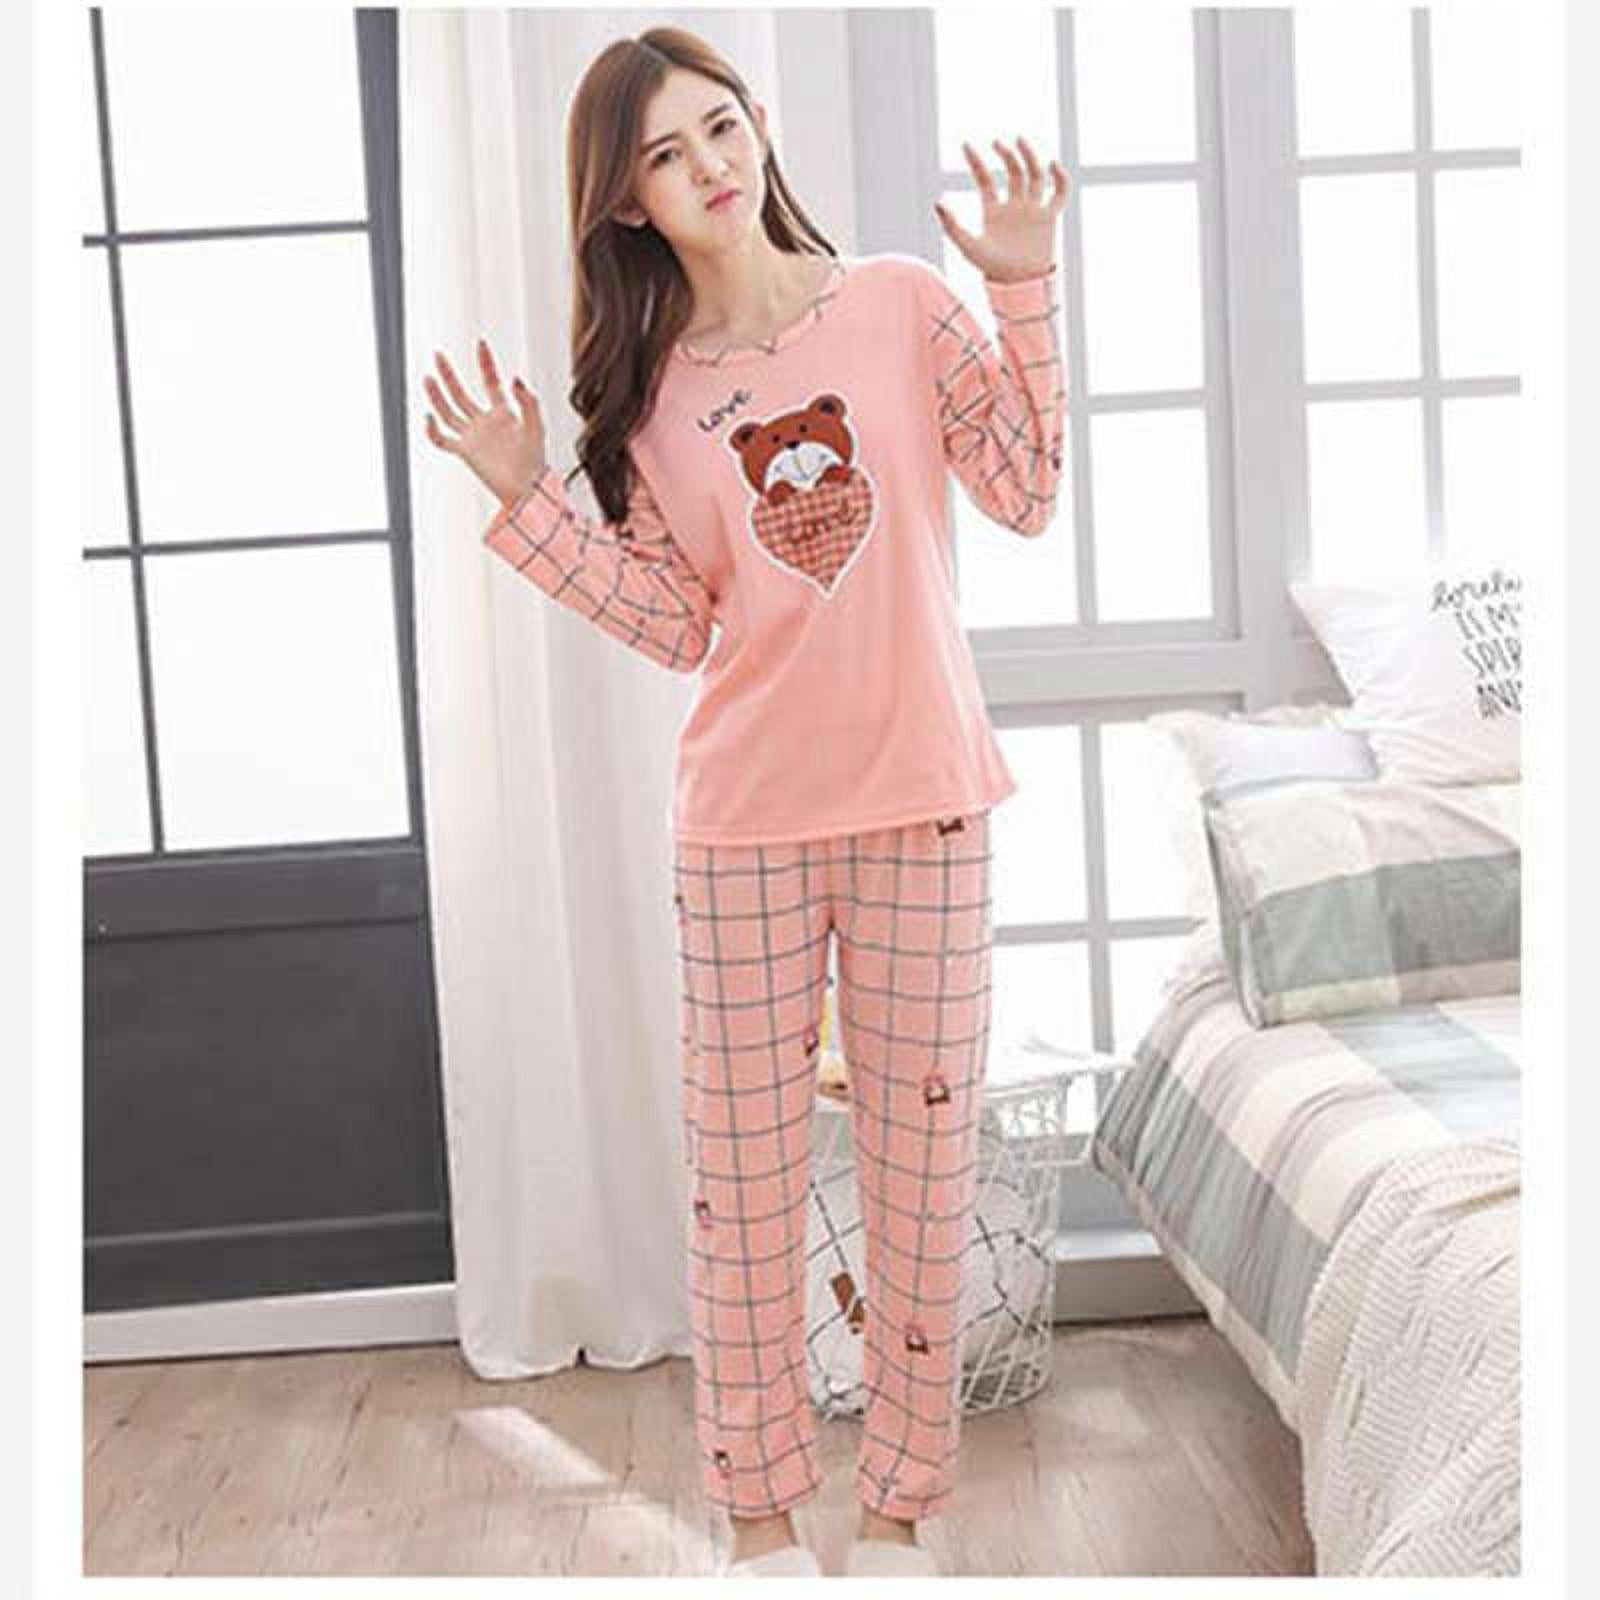 Panda Pyjamas PJ Nightwear fit 16"/40cm BUILD your own TEDDY BEAR CLOTHES 